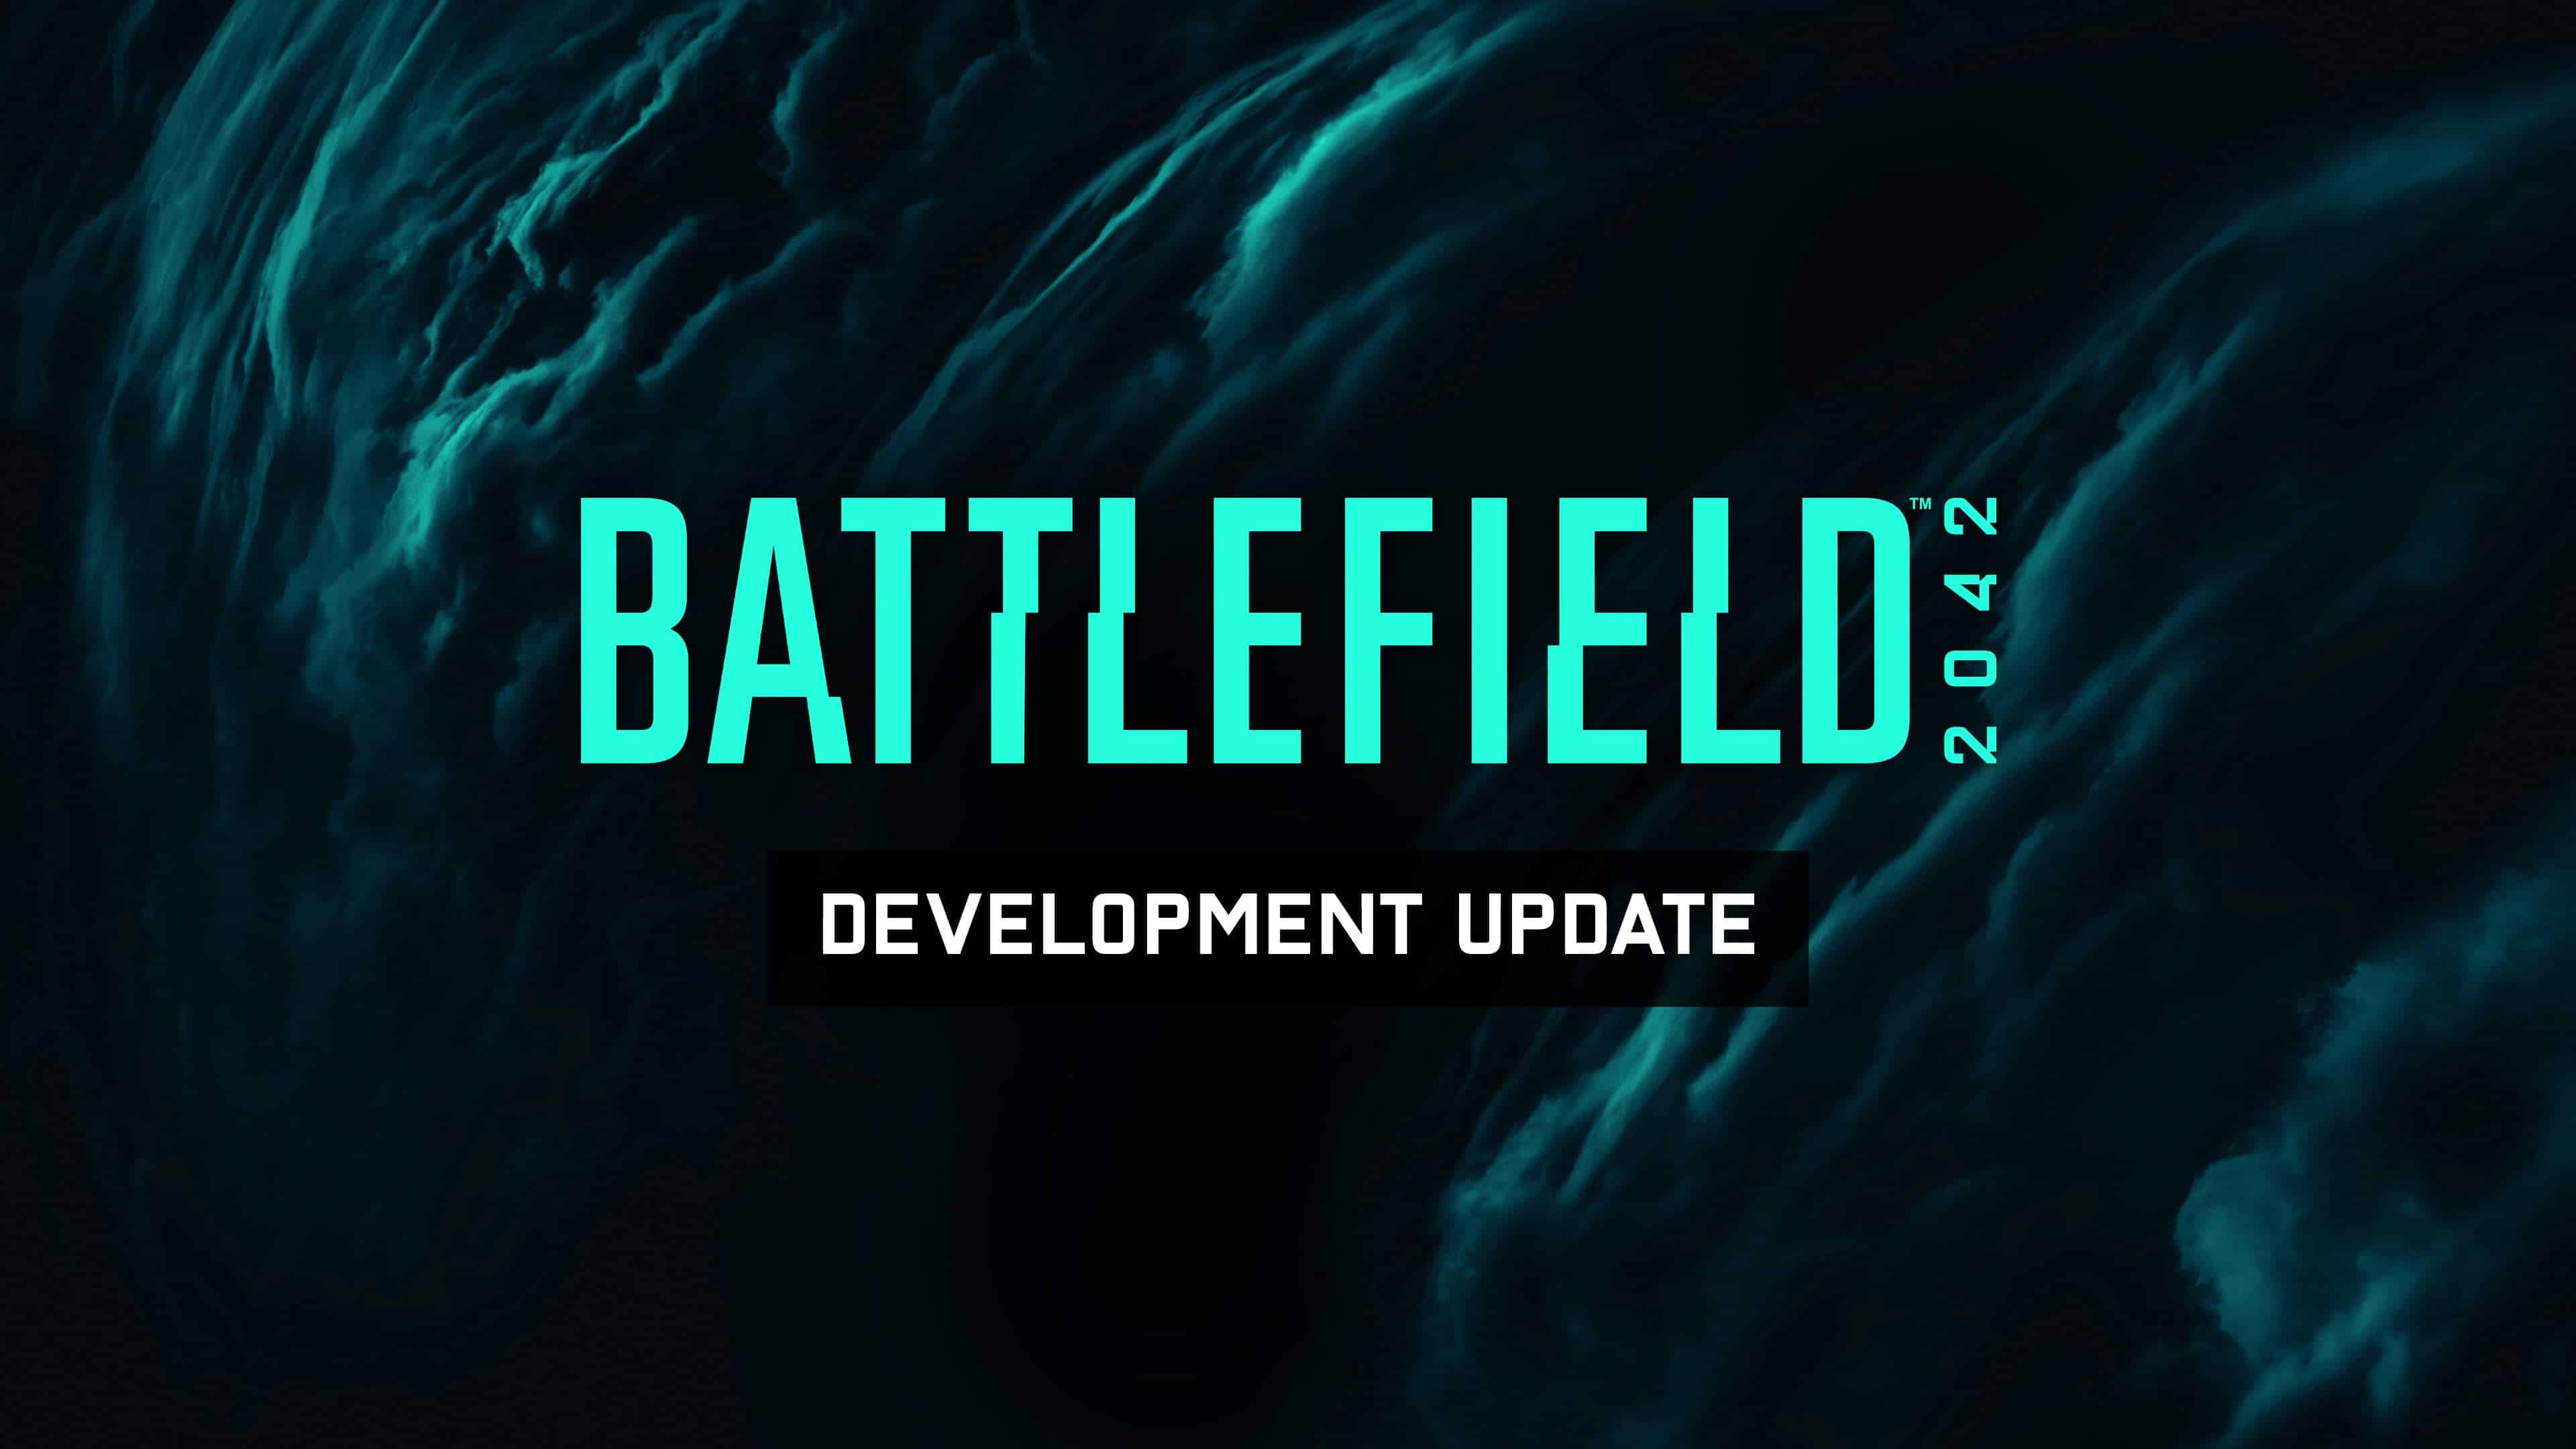 Battlefield 2042 new development update